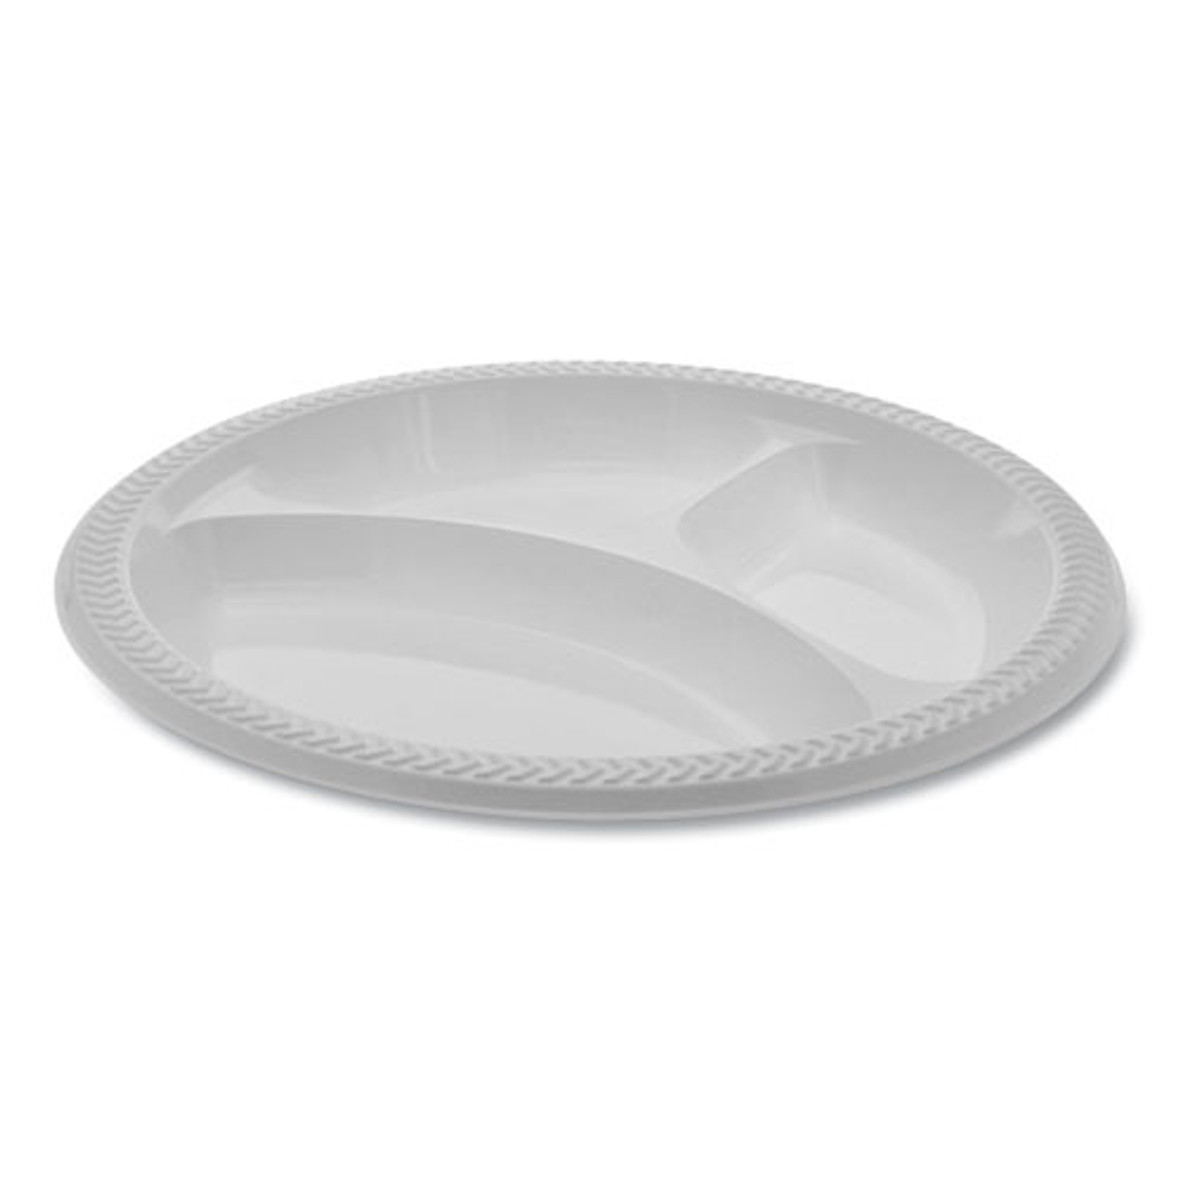 Meadoware Ops Dinnerware, 3-compartment Plate, 10.25" Dia, White, 500/carton